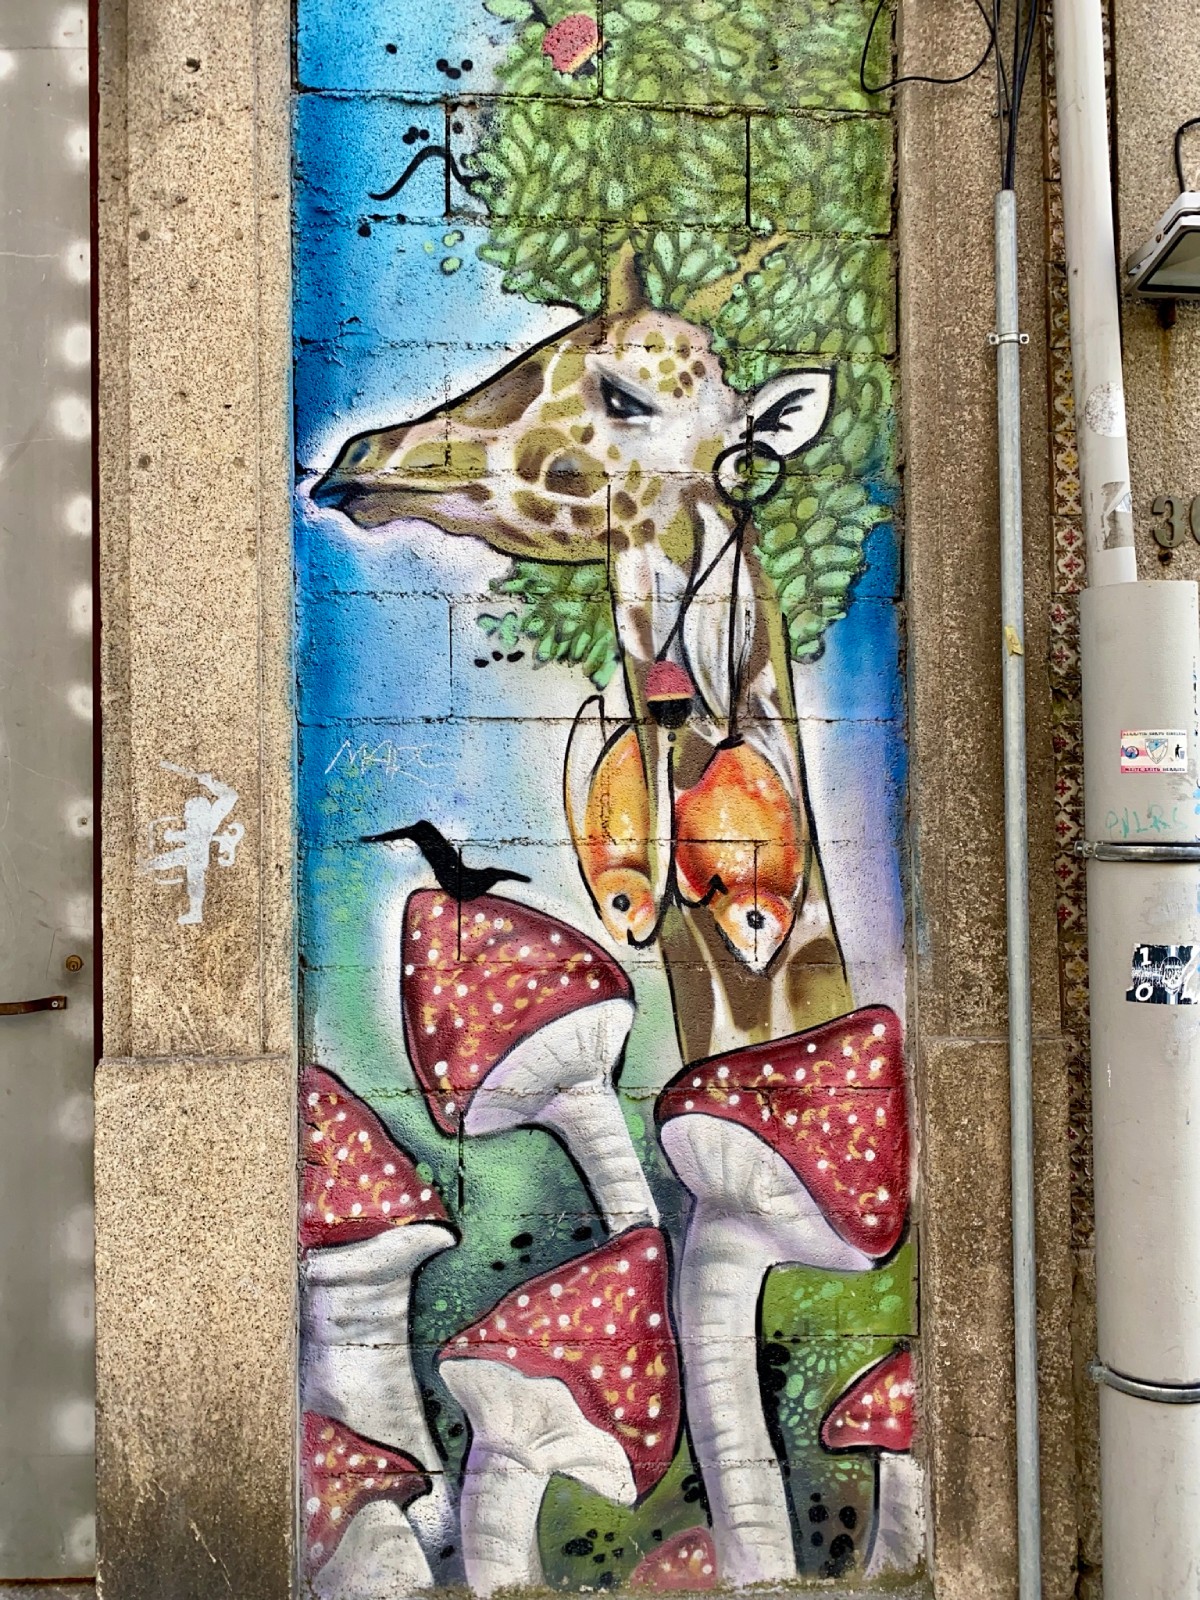 Porto has such fun street art